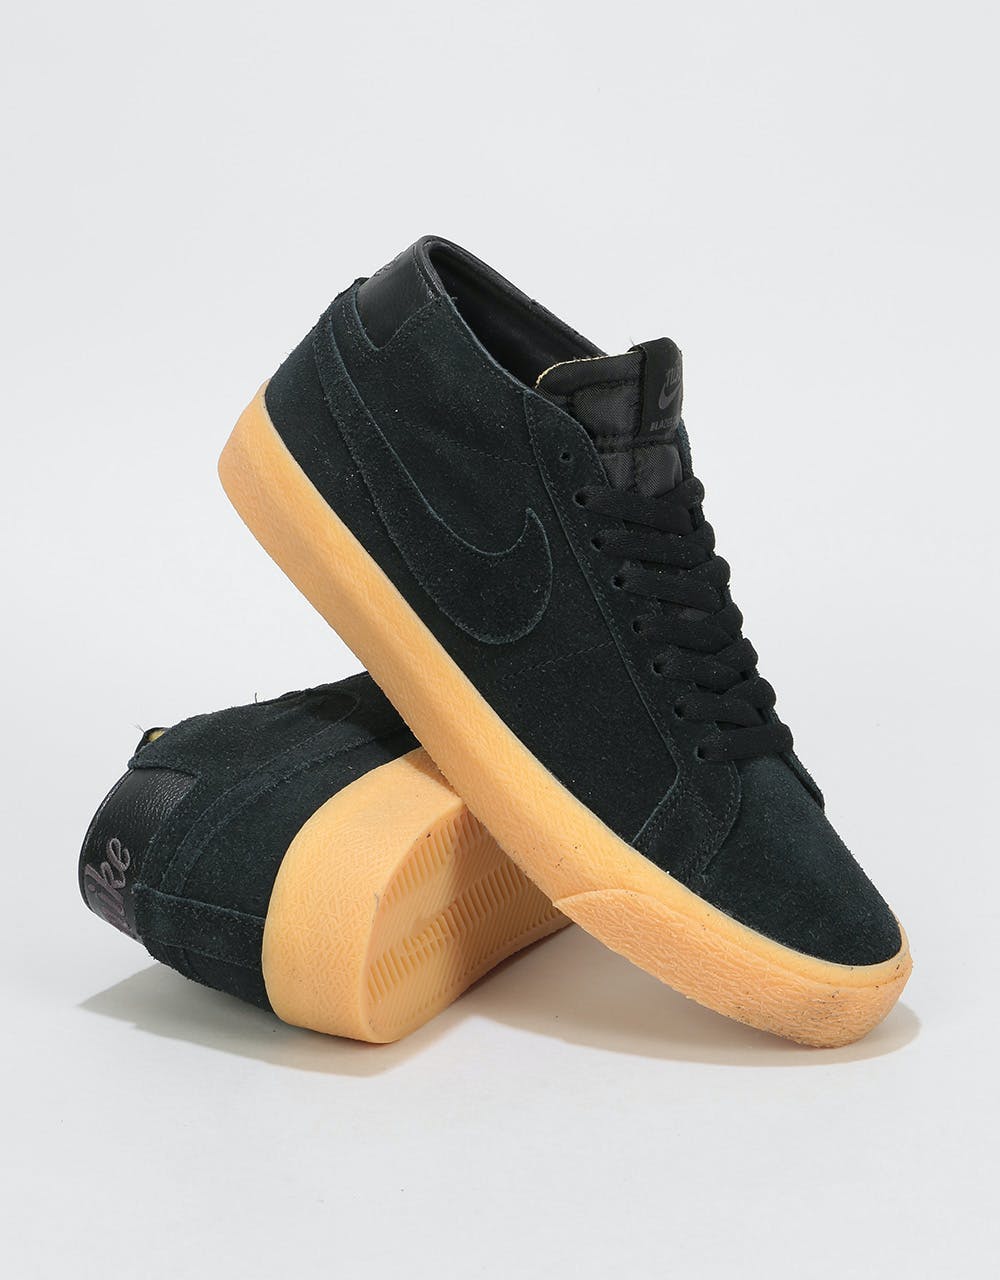 Nike SB Zoom Blazer Chukka Skate Shoes - Black/Black-Thunder Grey-Gum